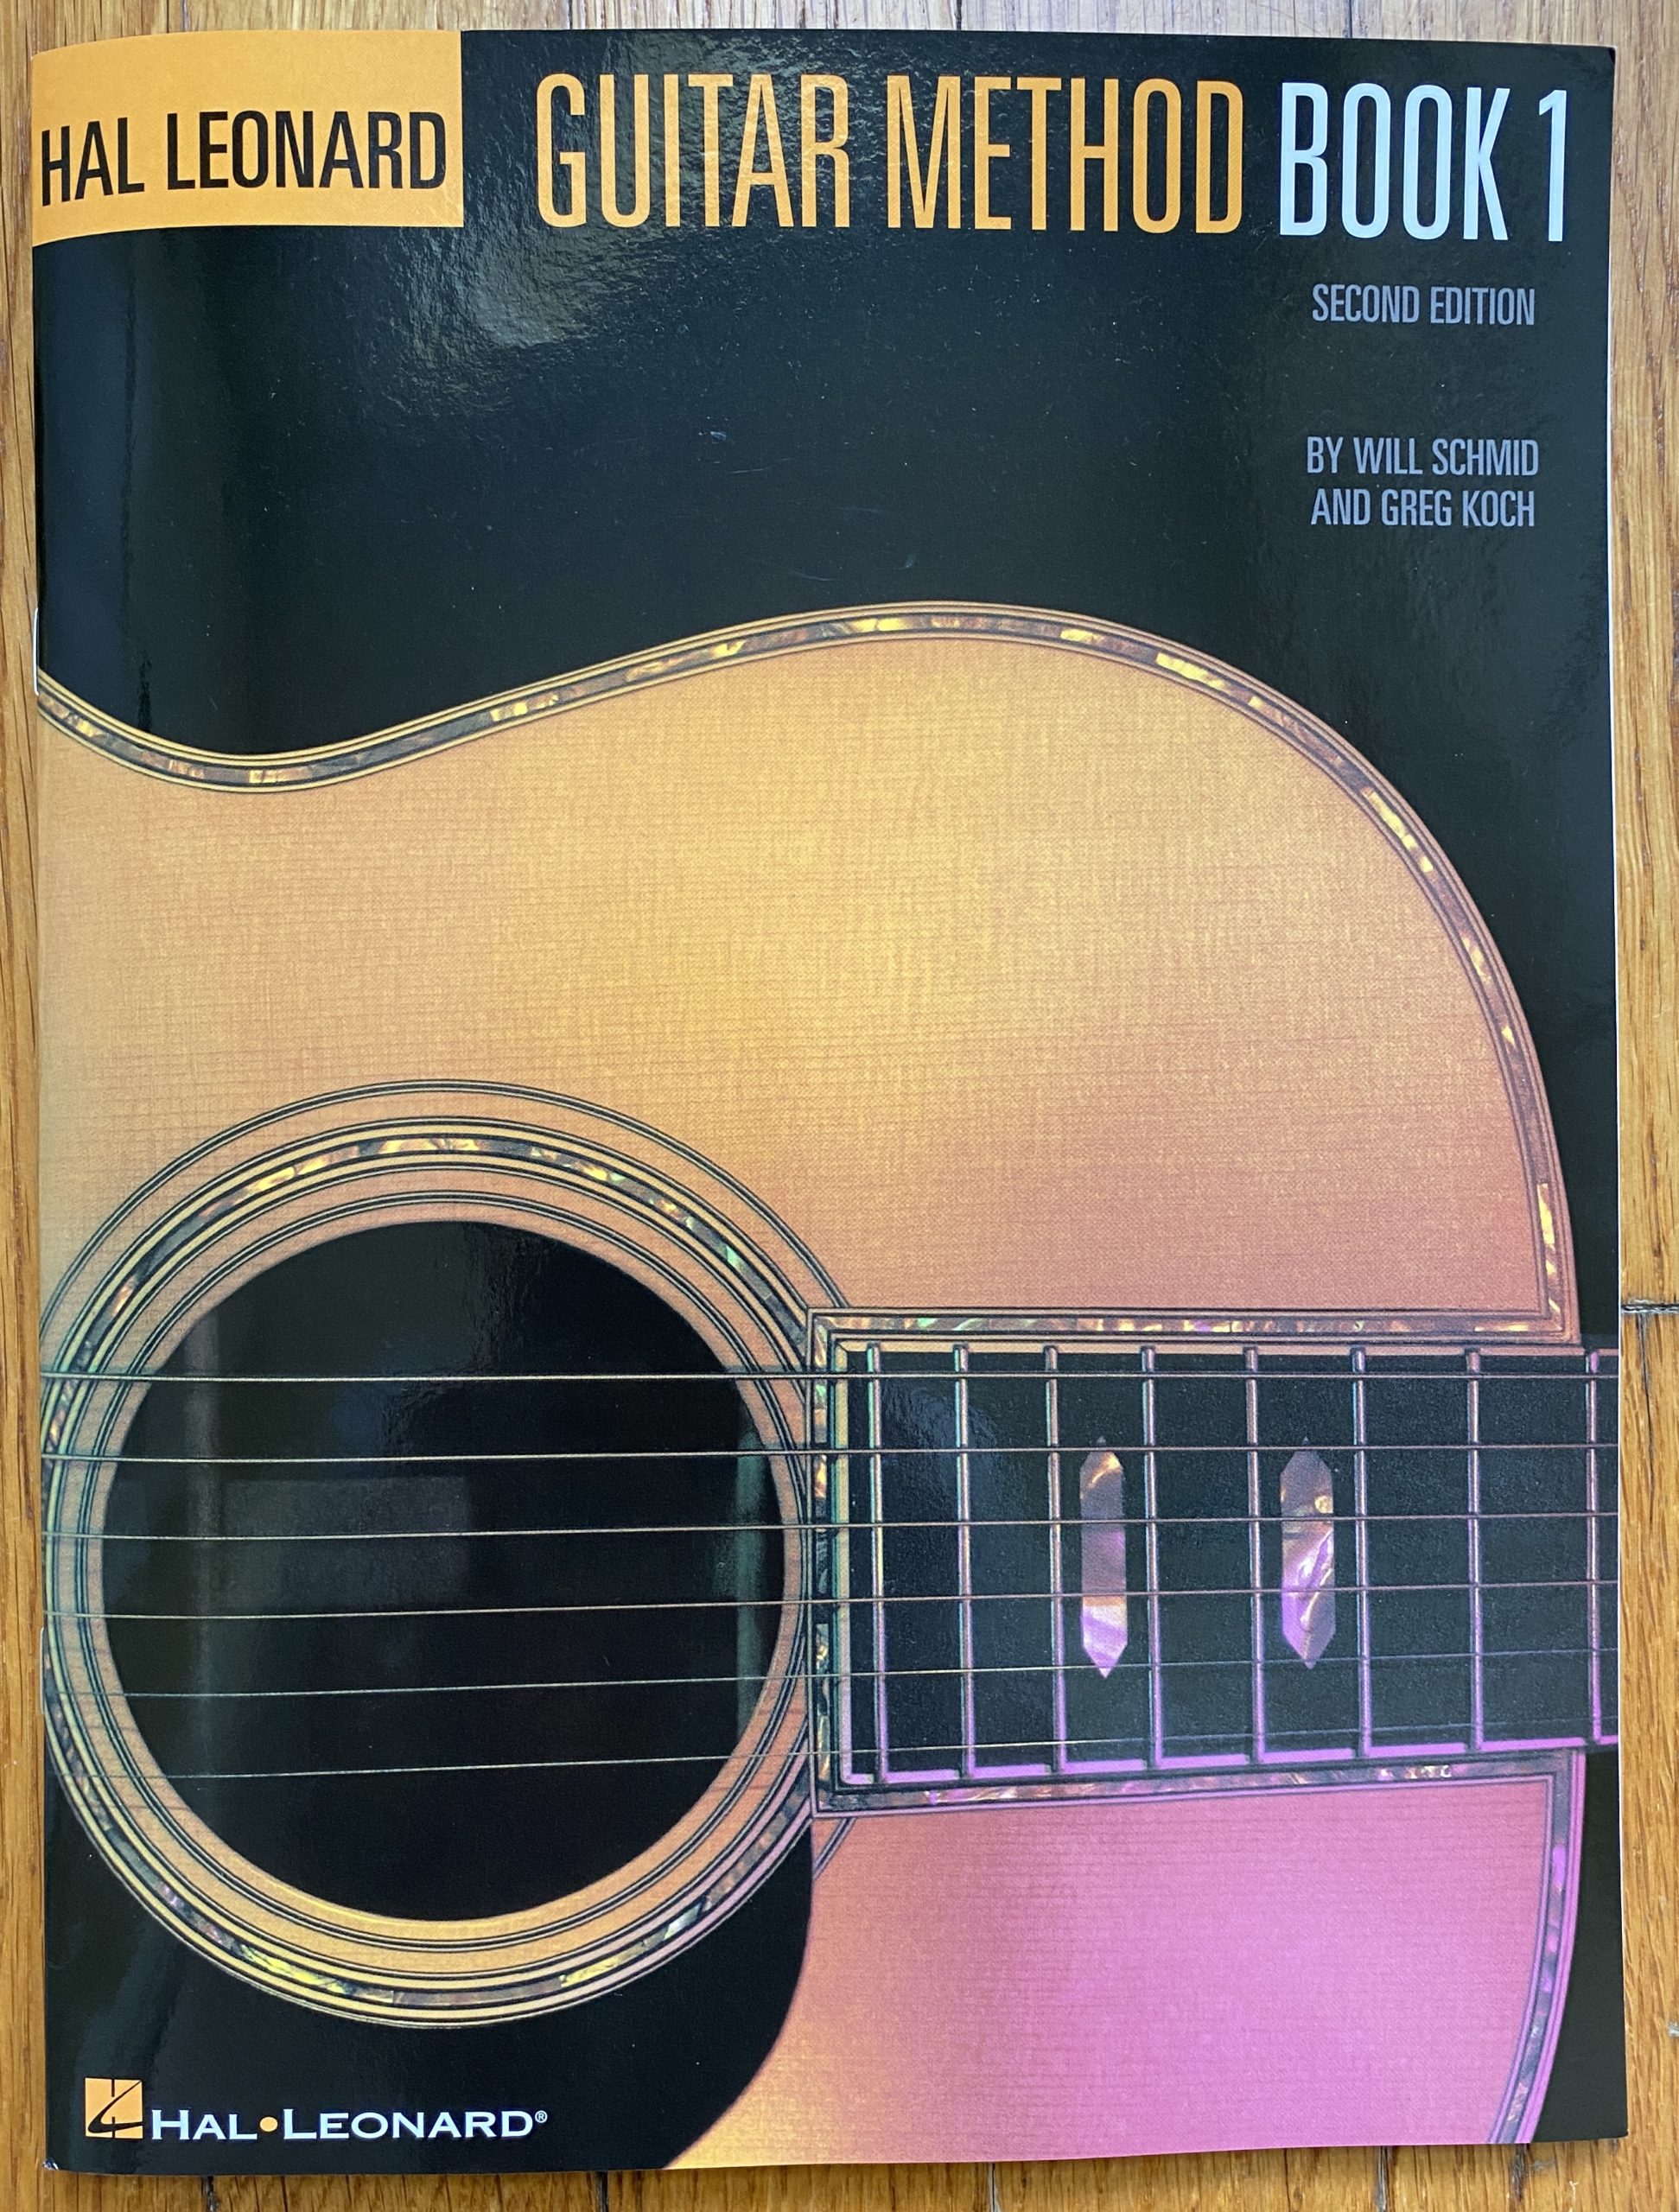 Hal Leonard Guitar Method Book 1 cover